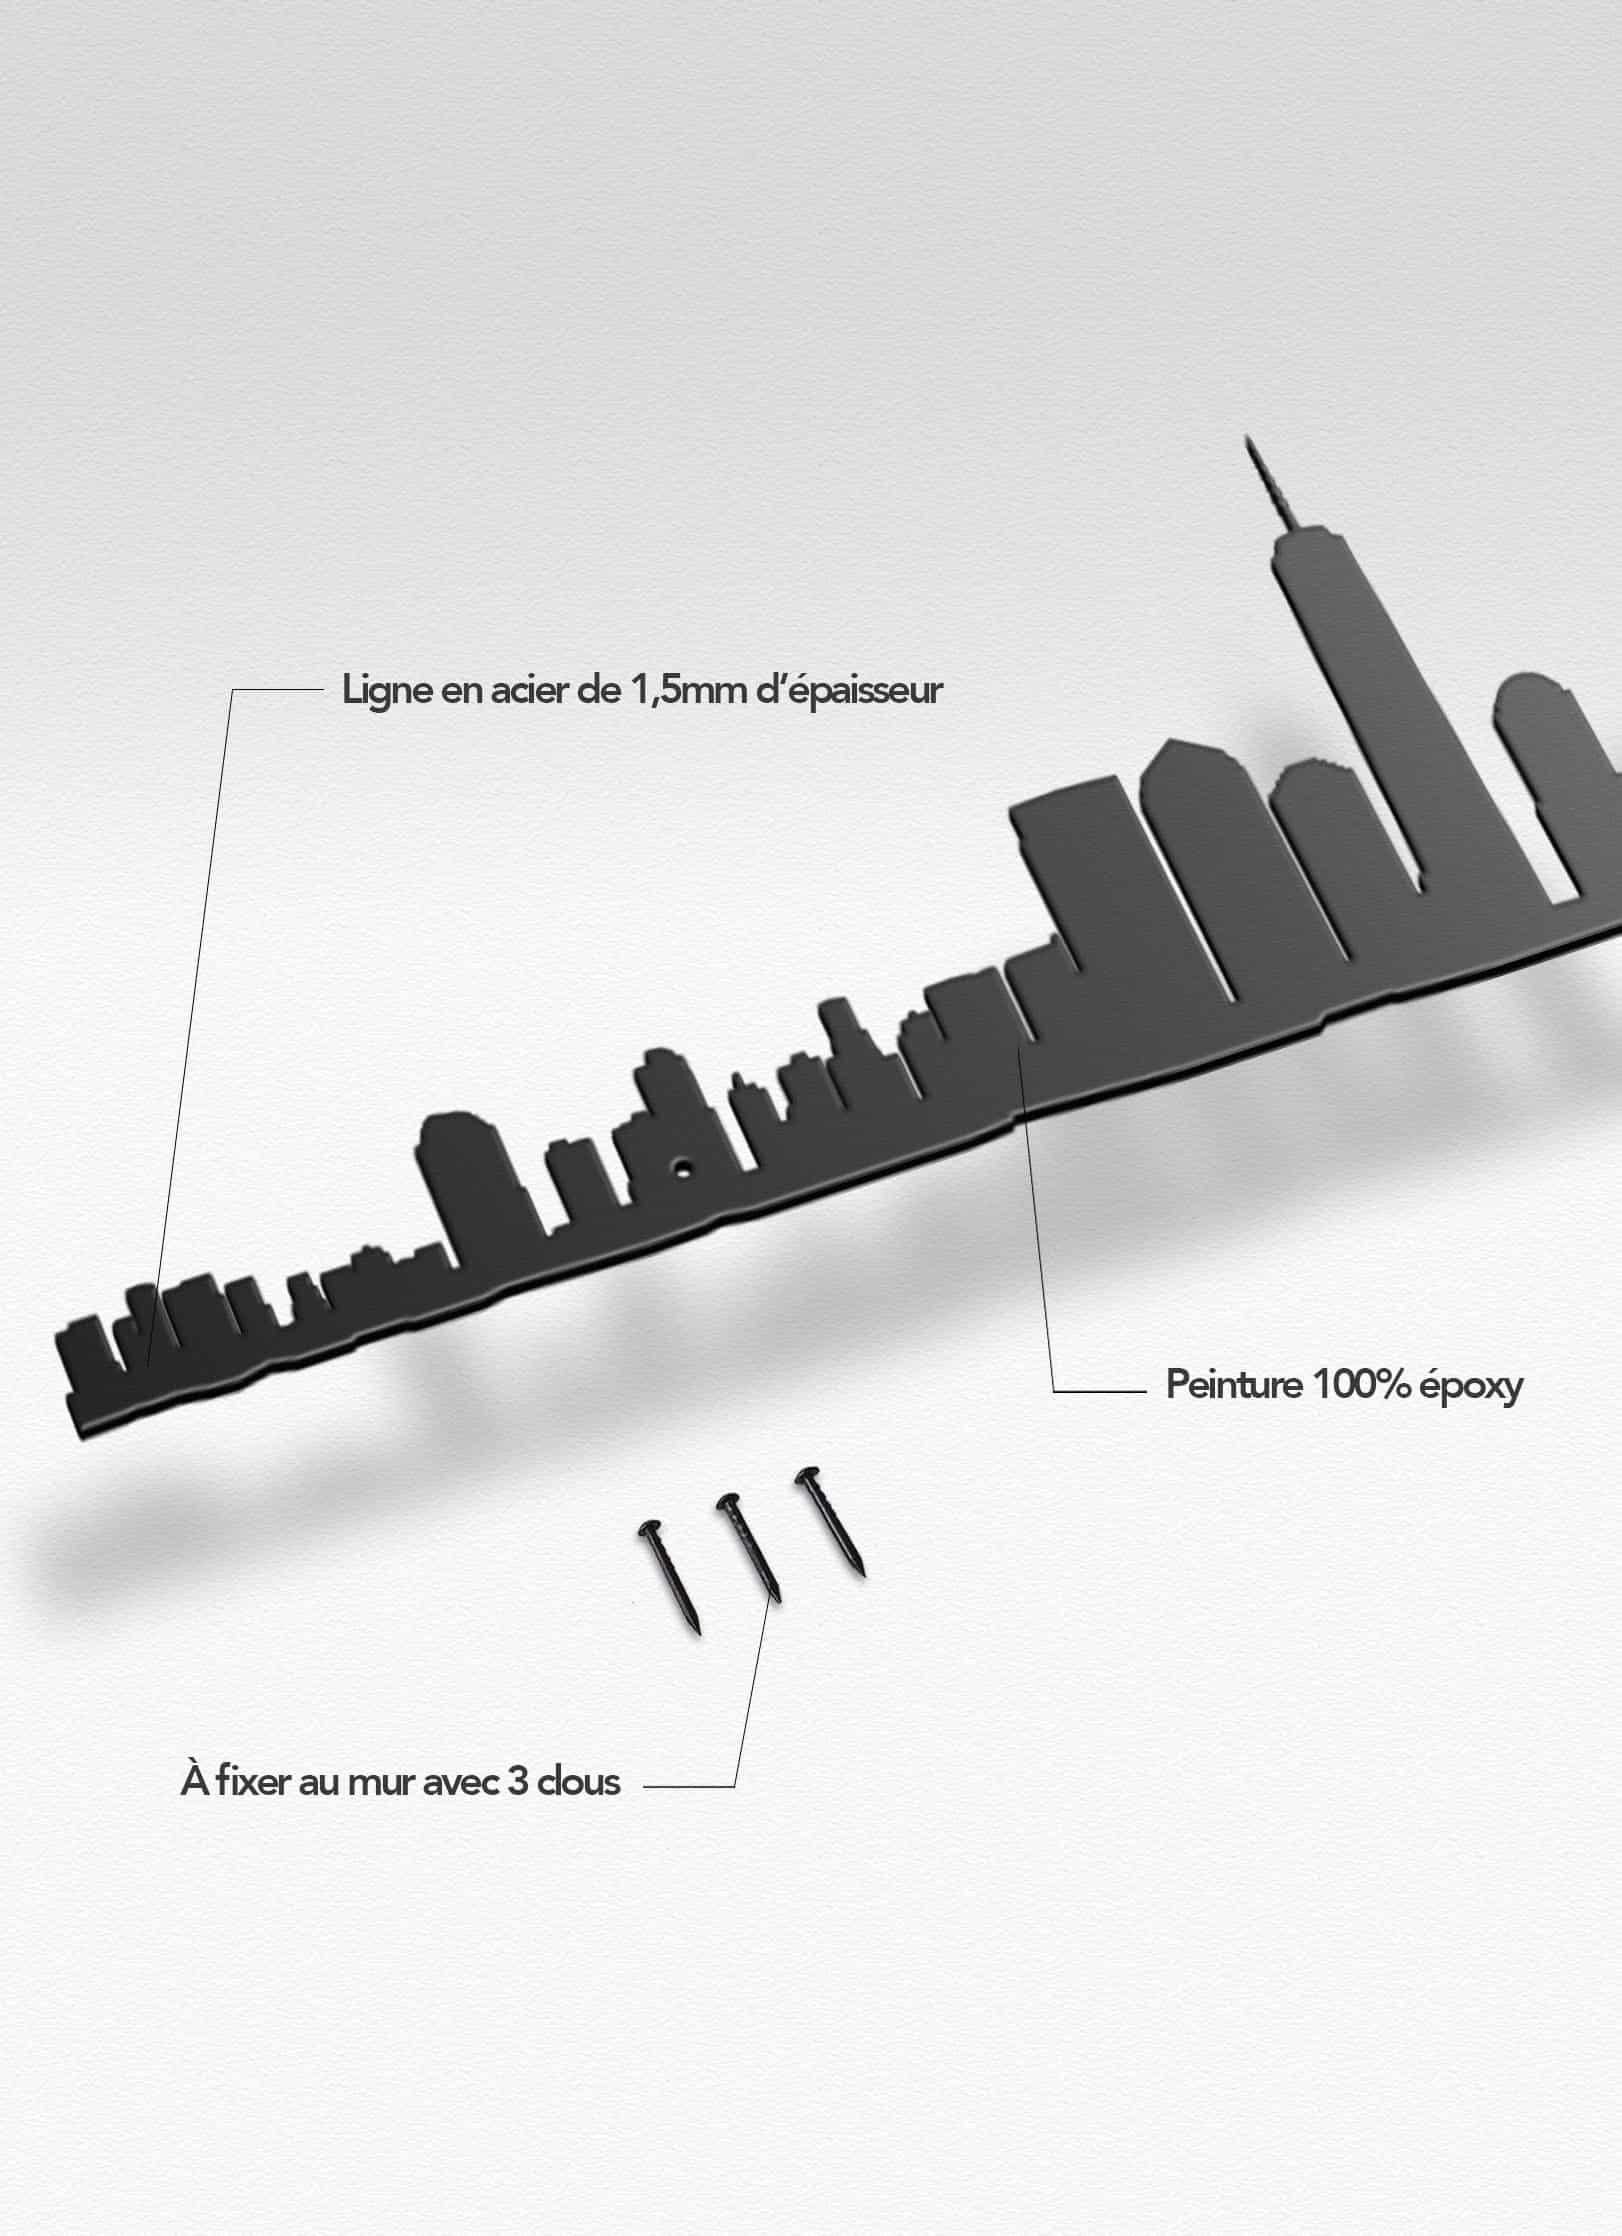 Presentation of the skyline of New York